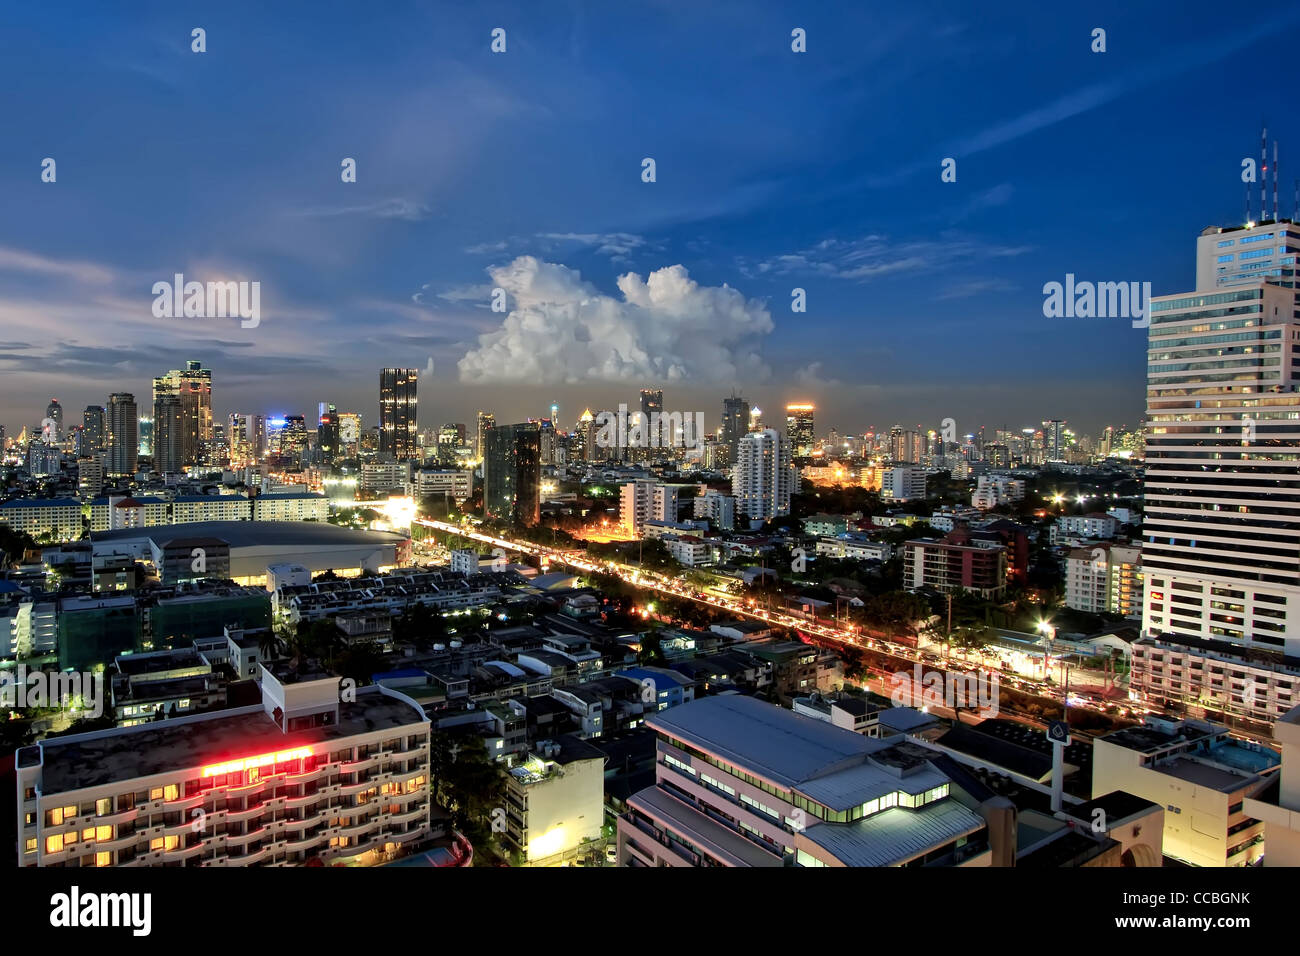 Plaza bangkok hi-res stock photography and images - Page 6 - Alamy